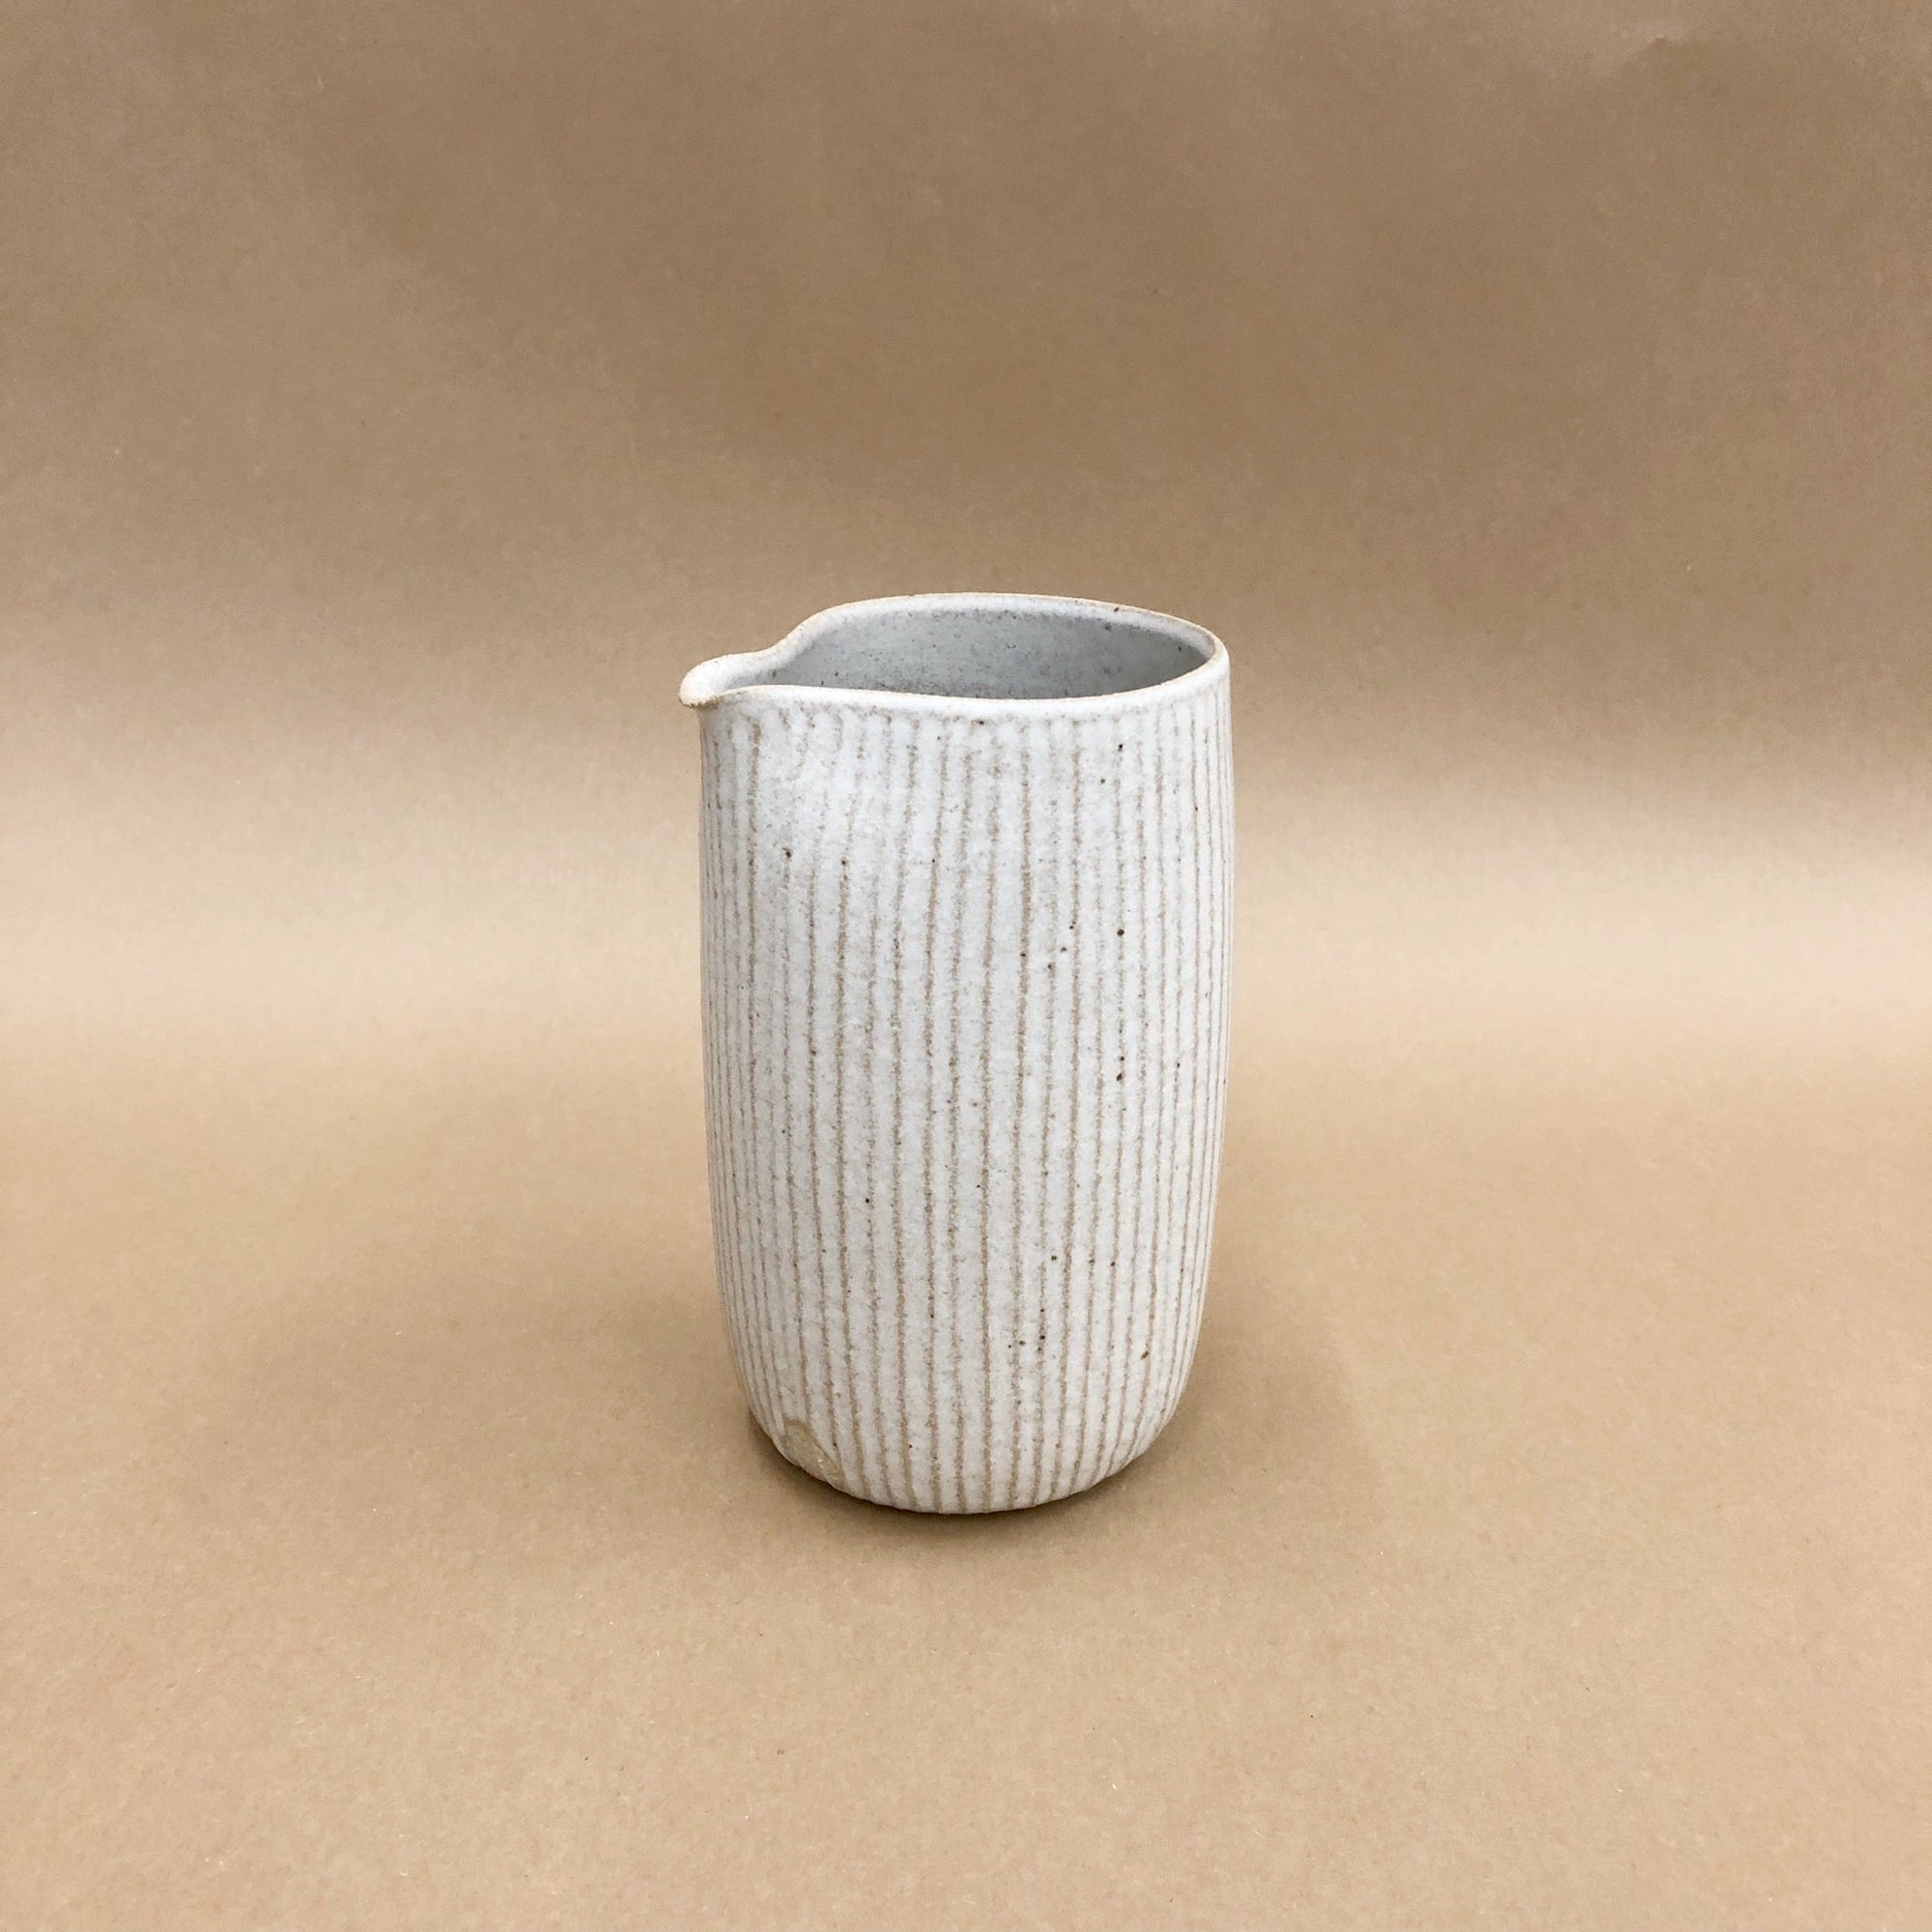 Tomoro Pottery Ceramic Rain Pitcher | Tortoise General Store